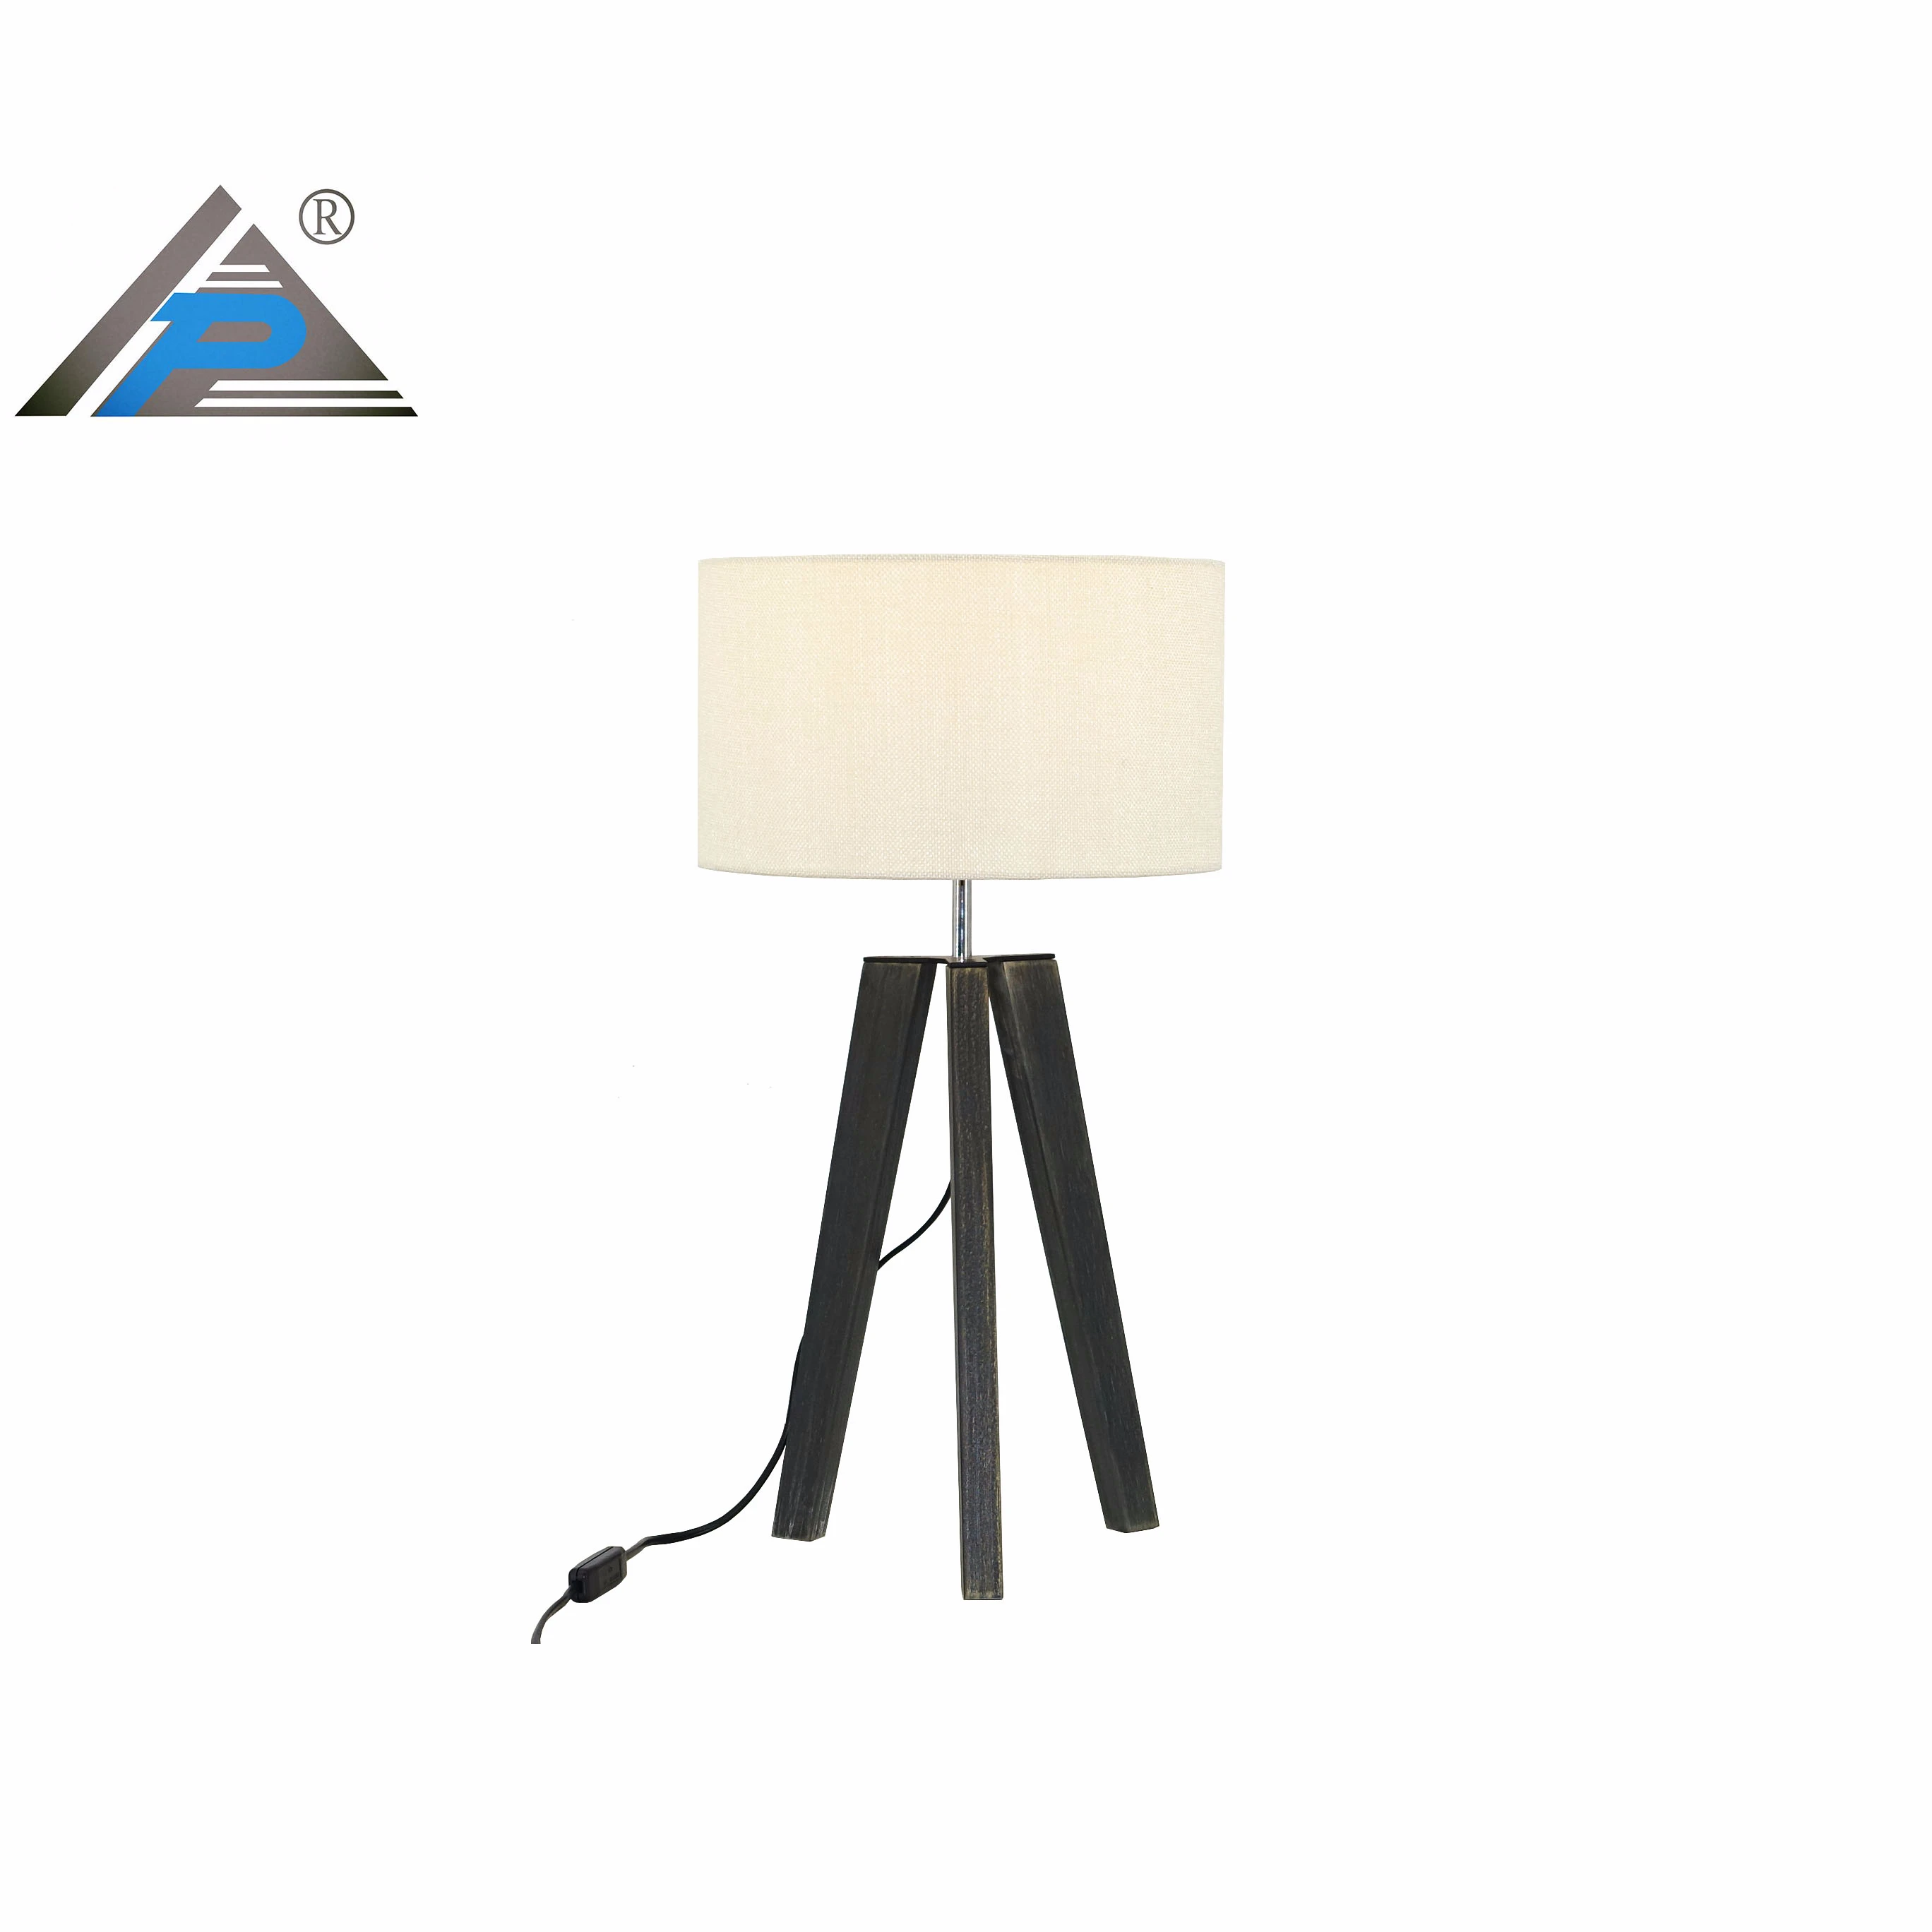 Home Stehlampe Tischlampe Vintage Fub Lampe Wohnzimmer Skandinavischer Stil E27 Buy Wood Carving Table Lamp,Woods Lamp,Wood Table Lamp on Alibaba.com